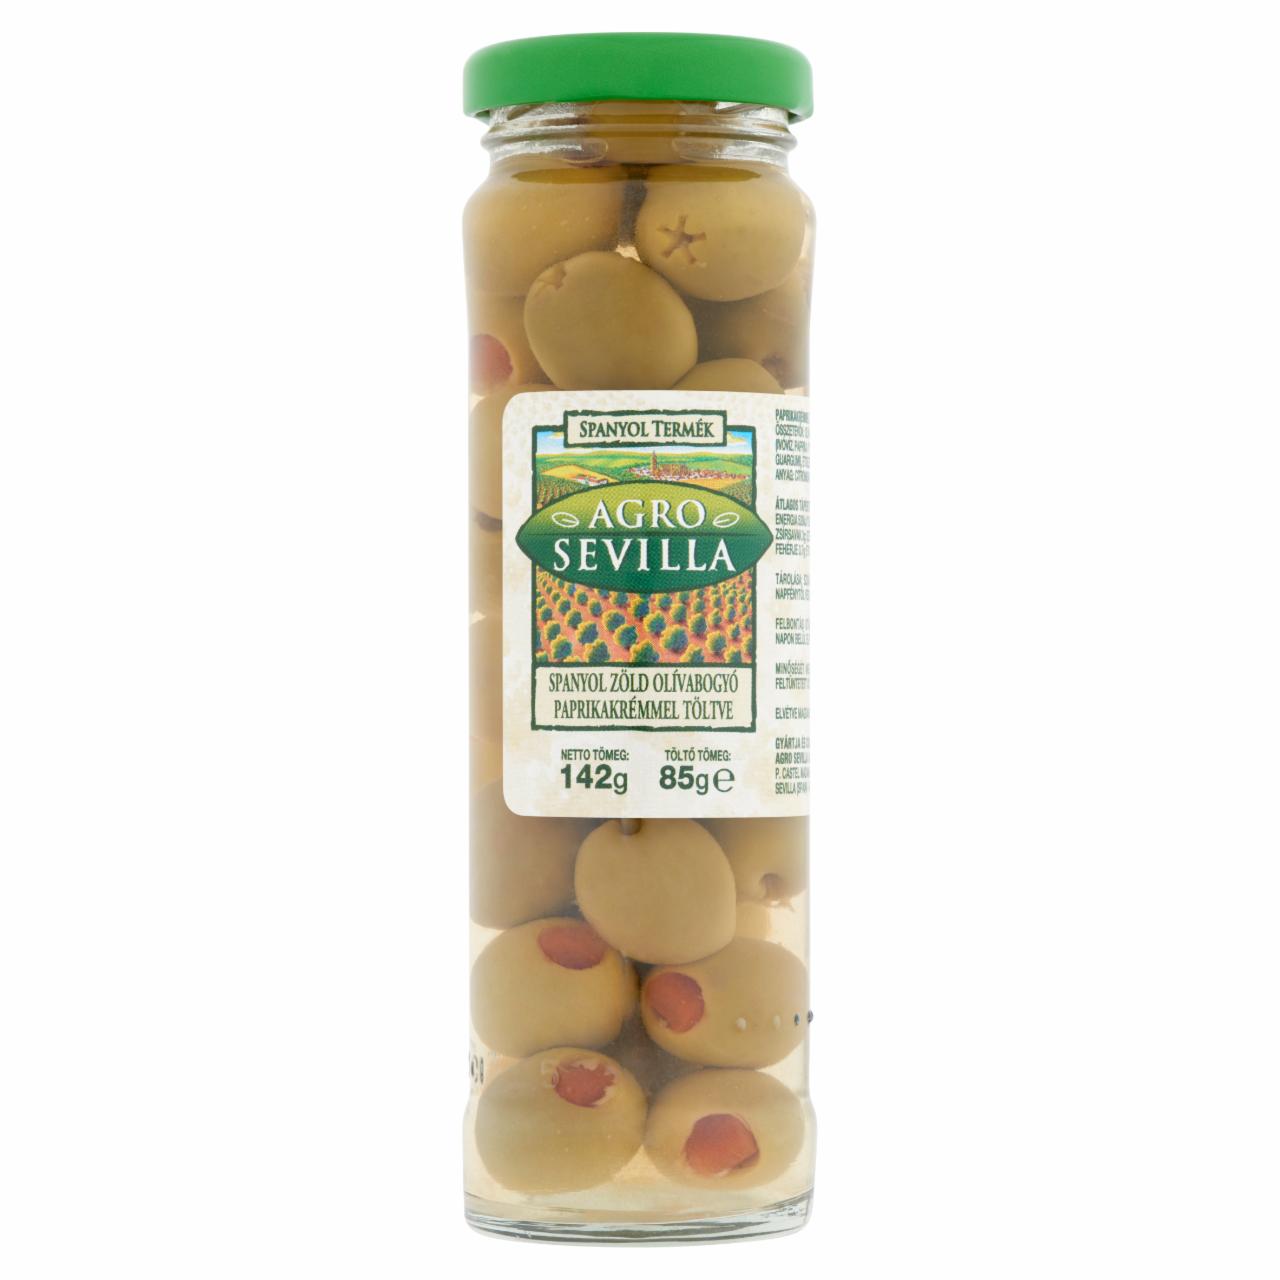 Képek - Agro Sevilla spanyol zöld olívabogyó paprikakrémmel töltve 142 g